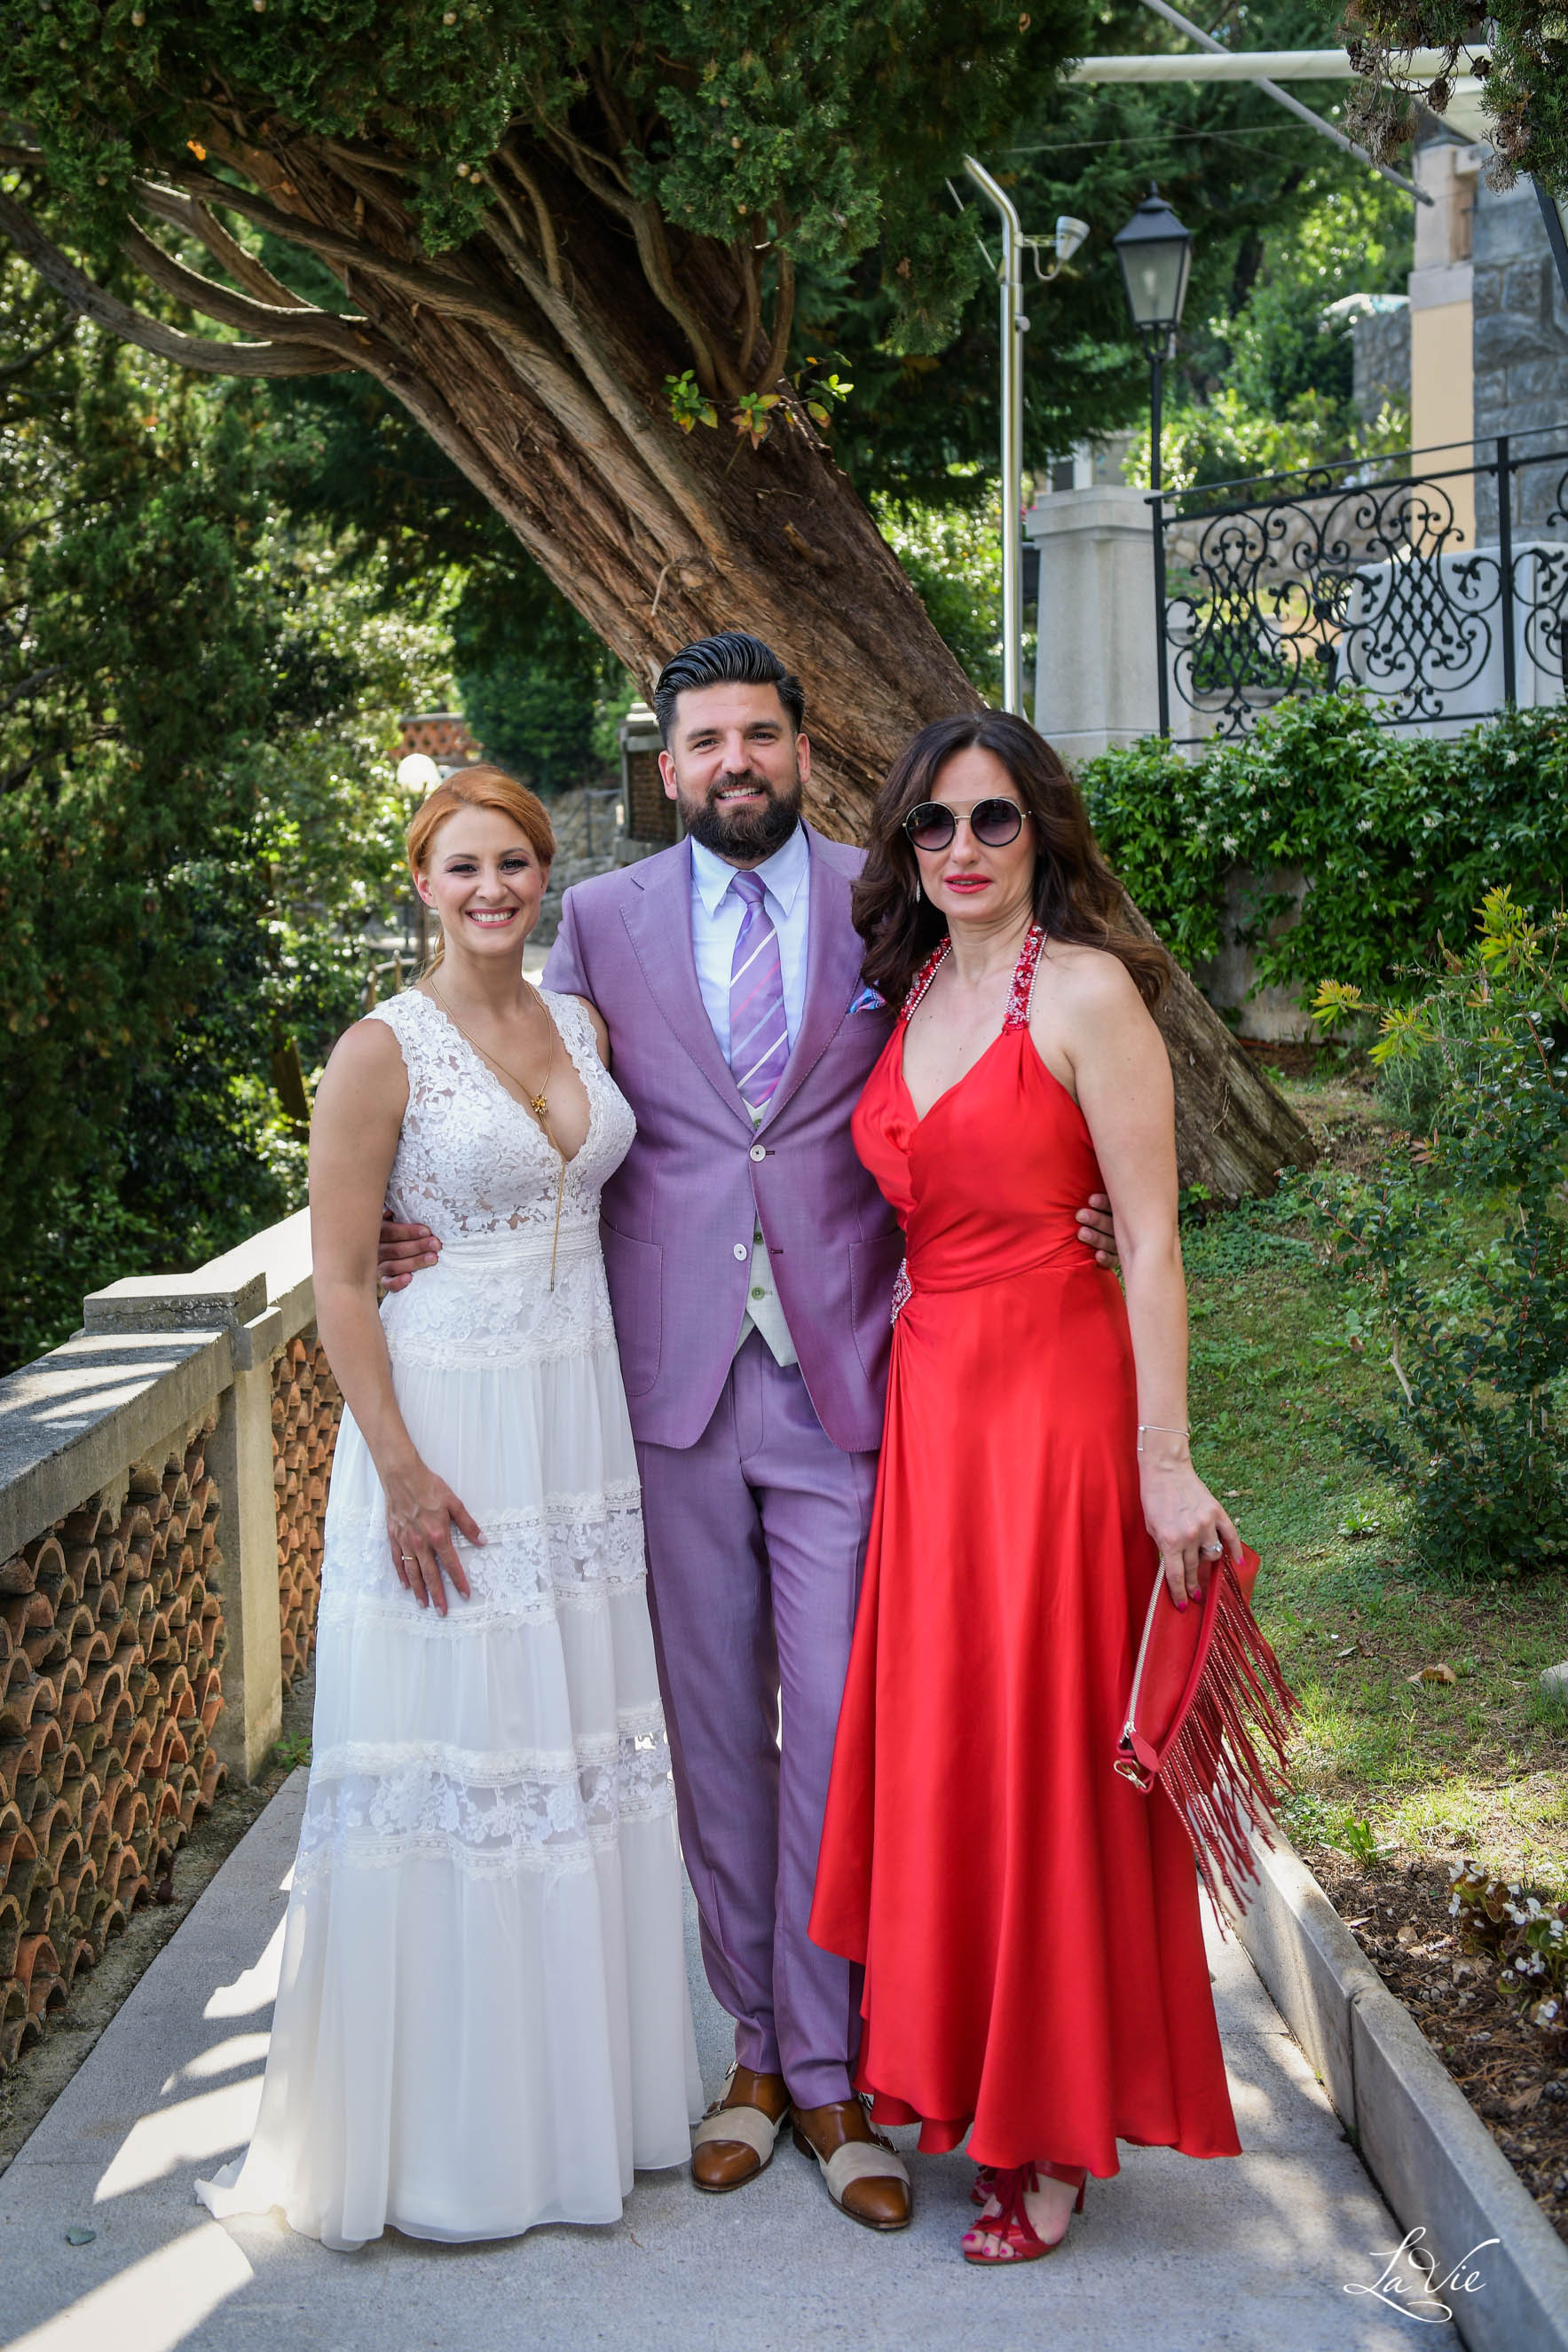 Eudaimonia wedding party uz projekt "Vinum amoris"